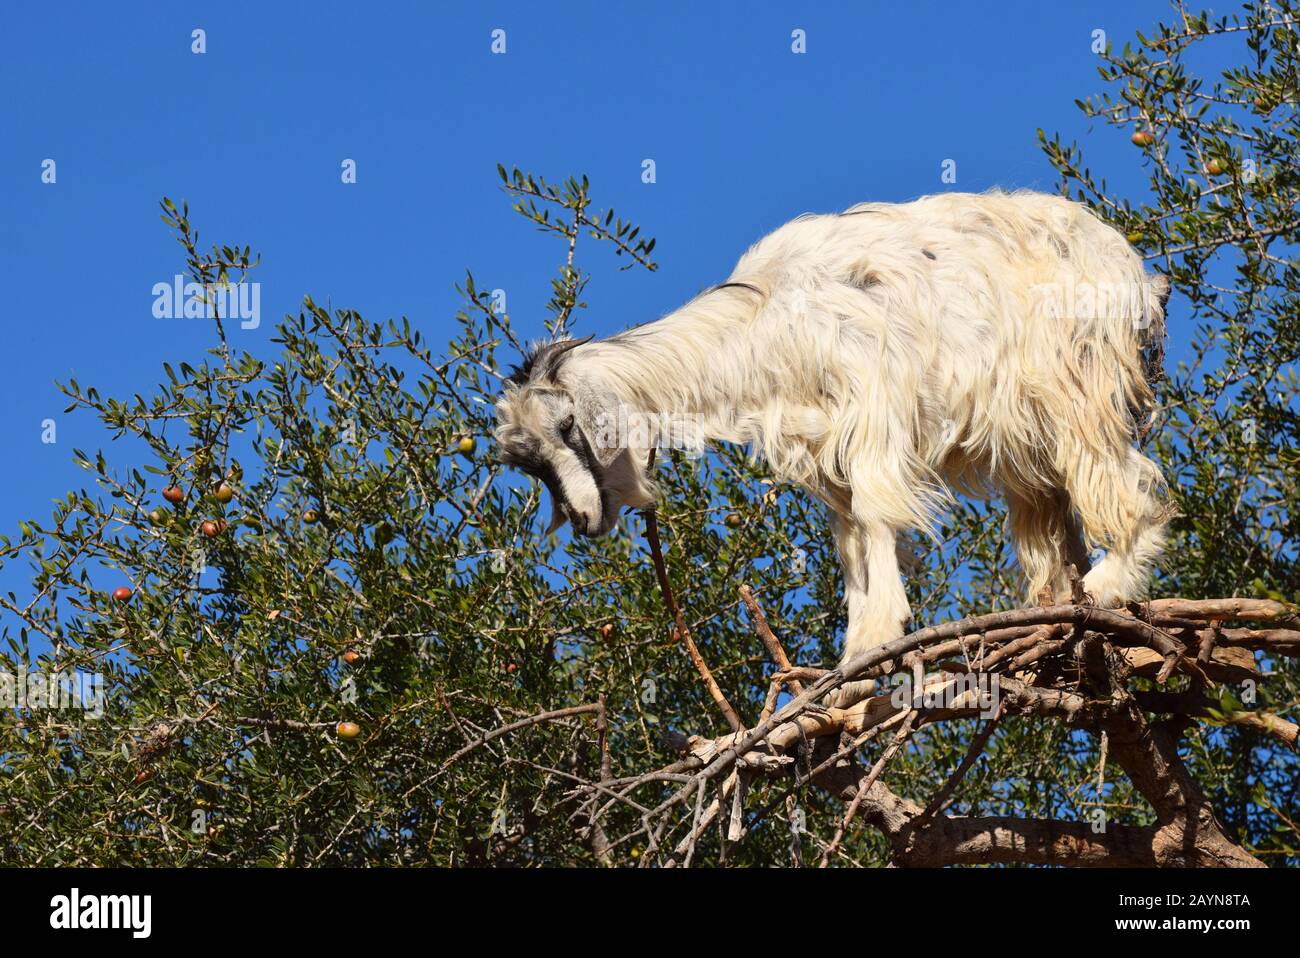 Des chèvres grimpantes d'arbres de Marocco debout haut dans les branches d'un arbre argan Banque D'Images